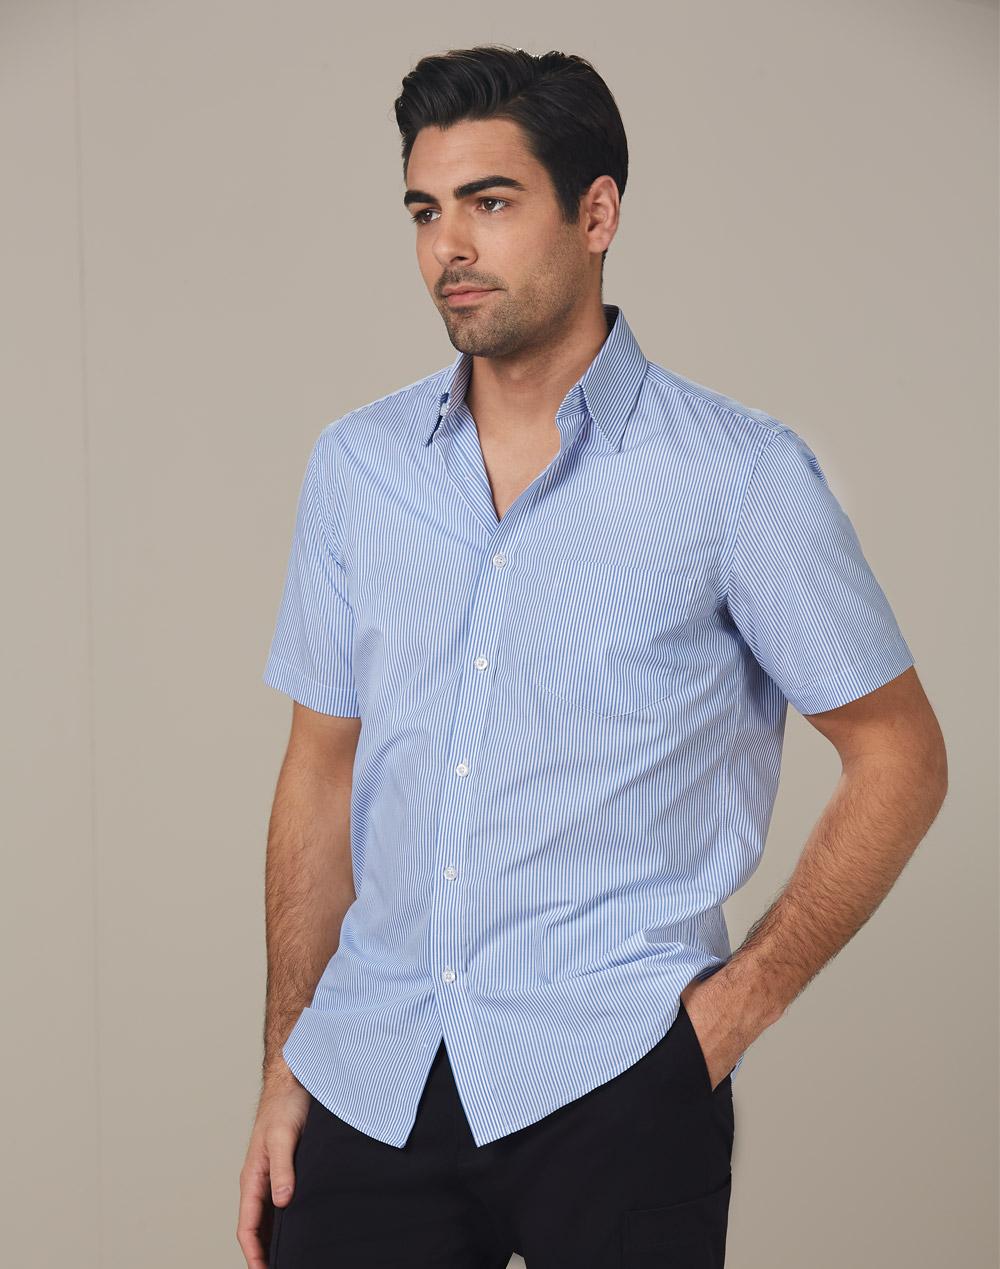 Benchmark M7231 Men's Balance Stripe Short Sleeve Shirt